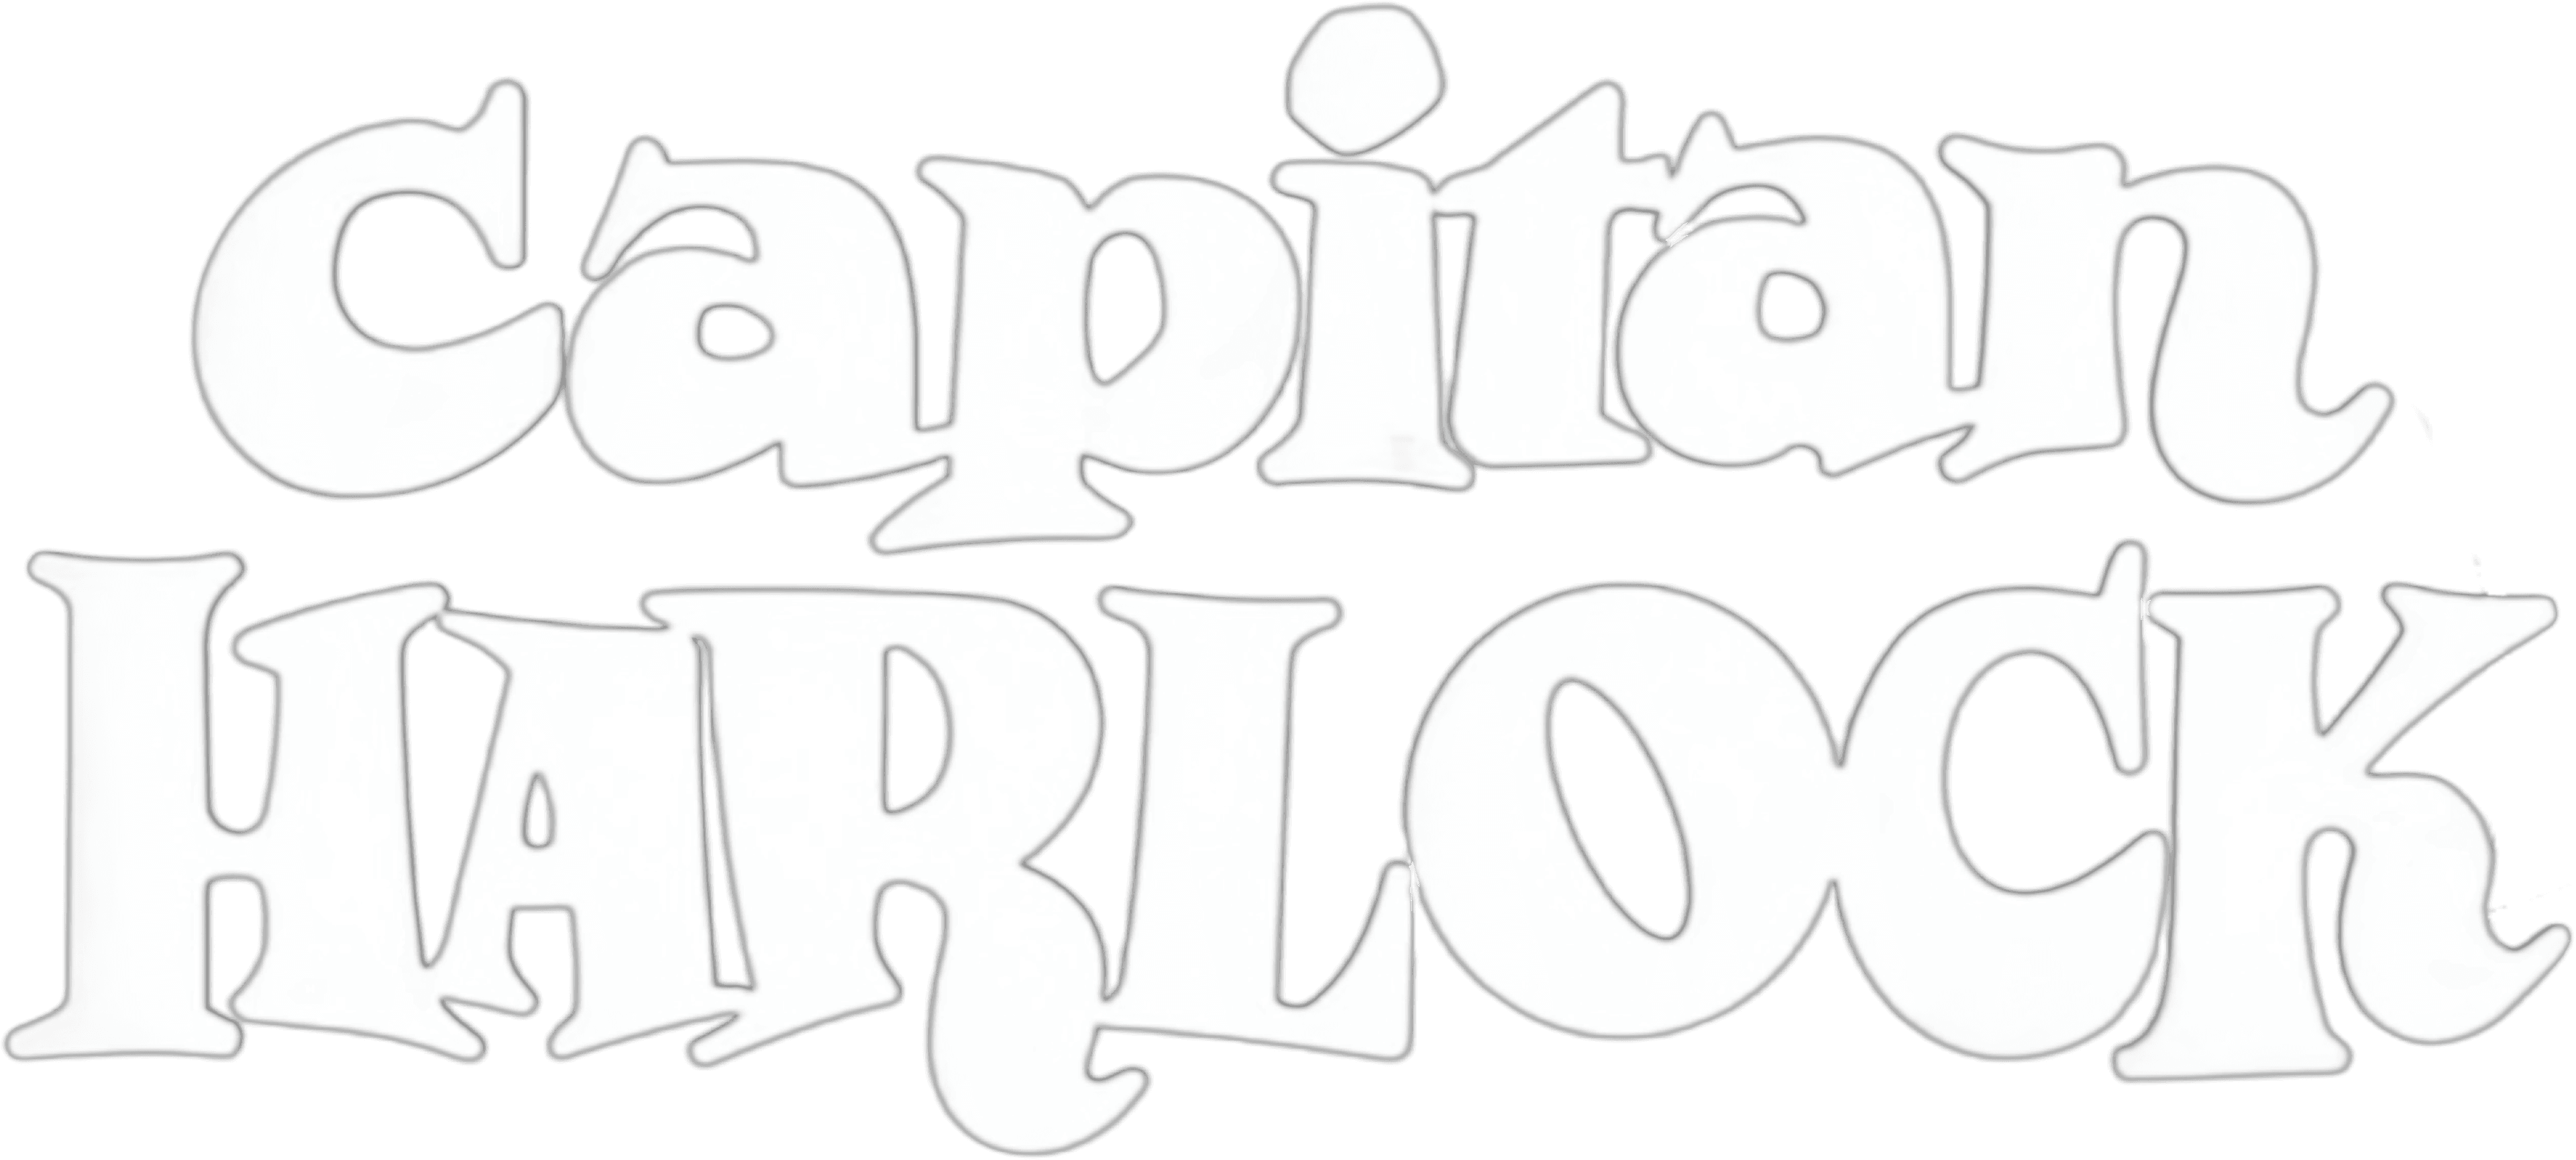 Space Pirate Captain Harlock logo